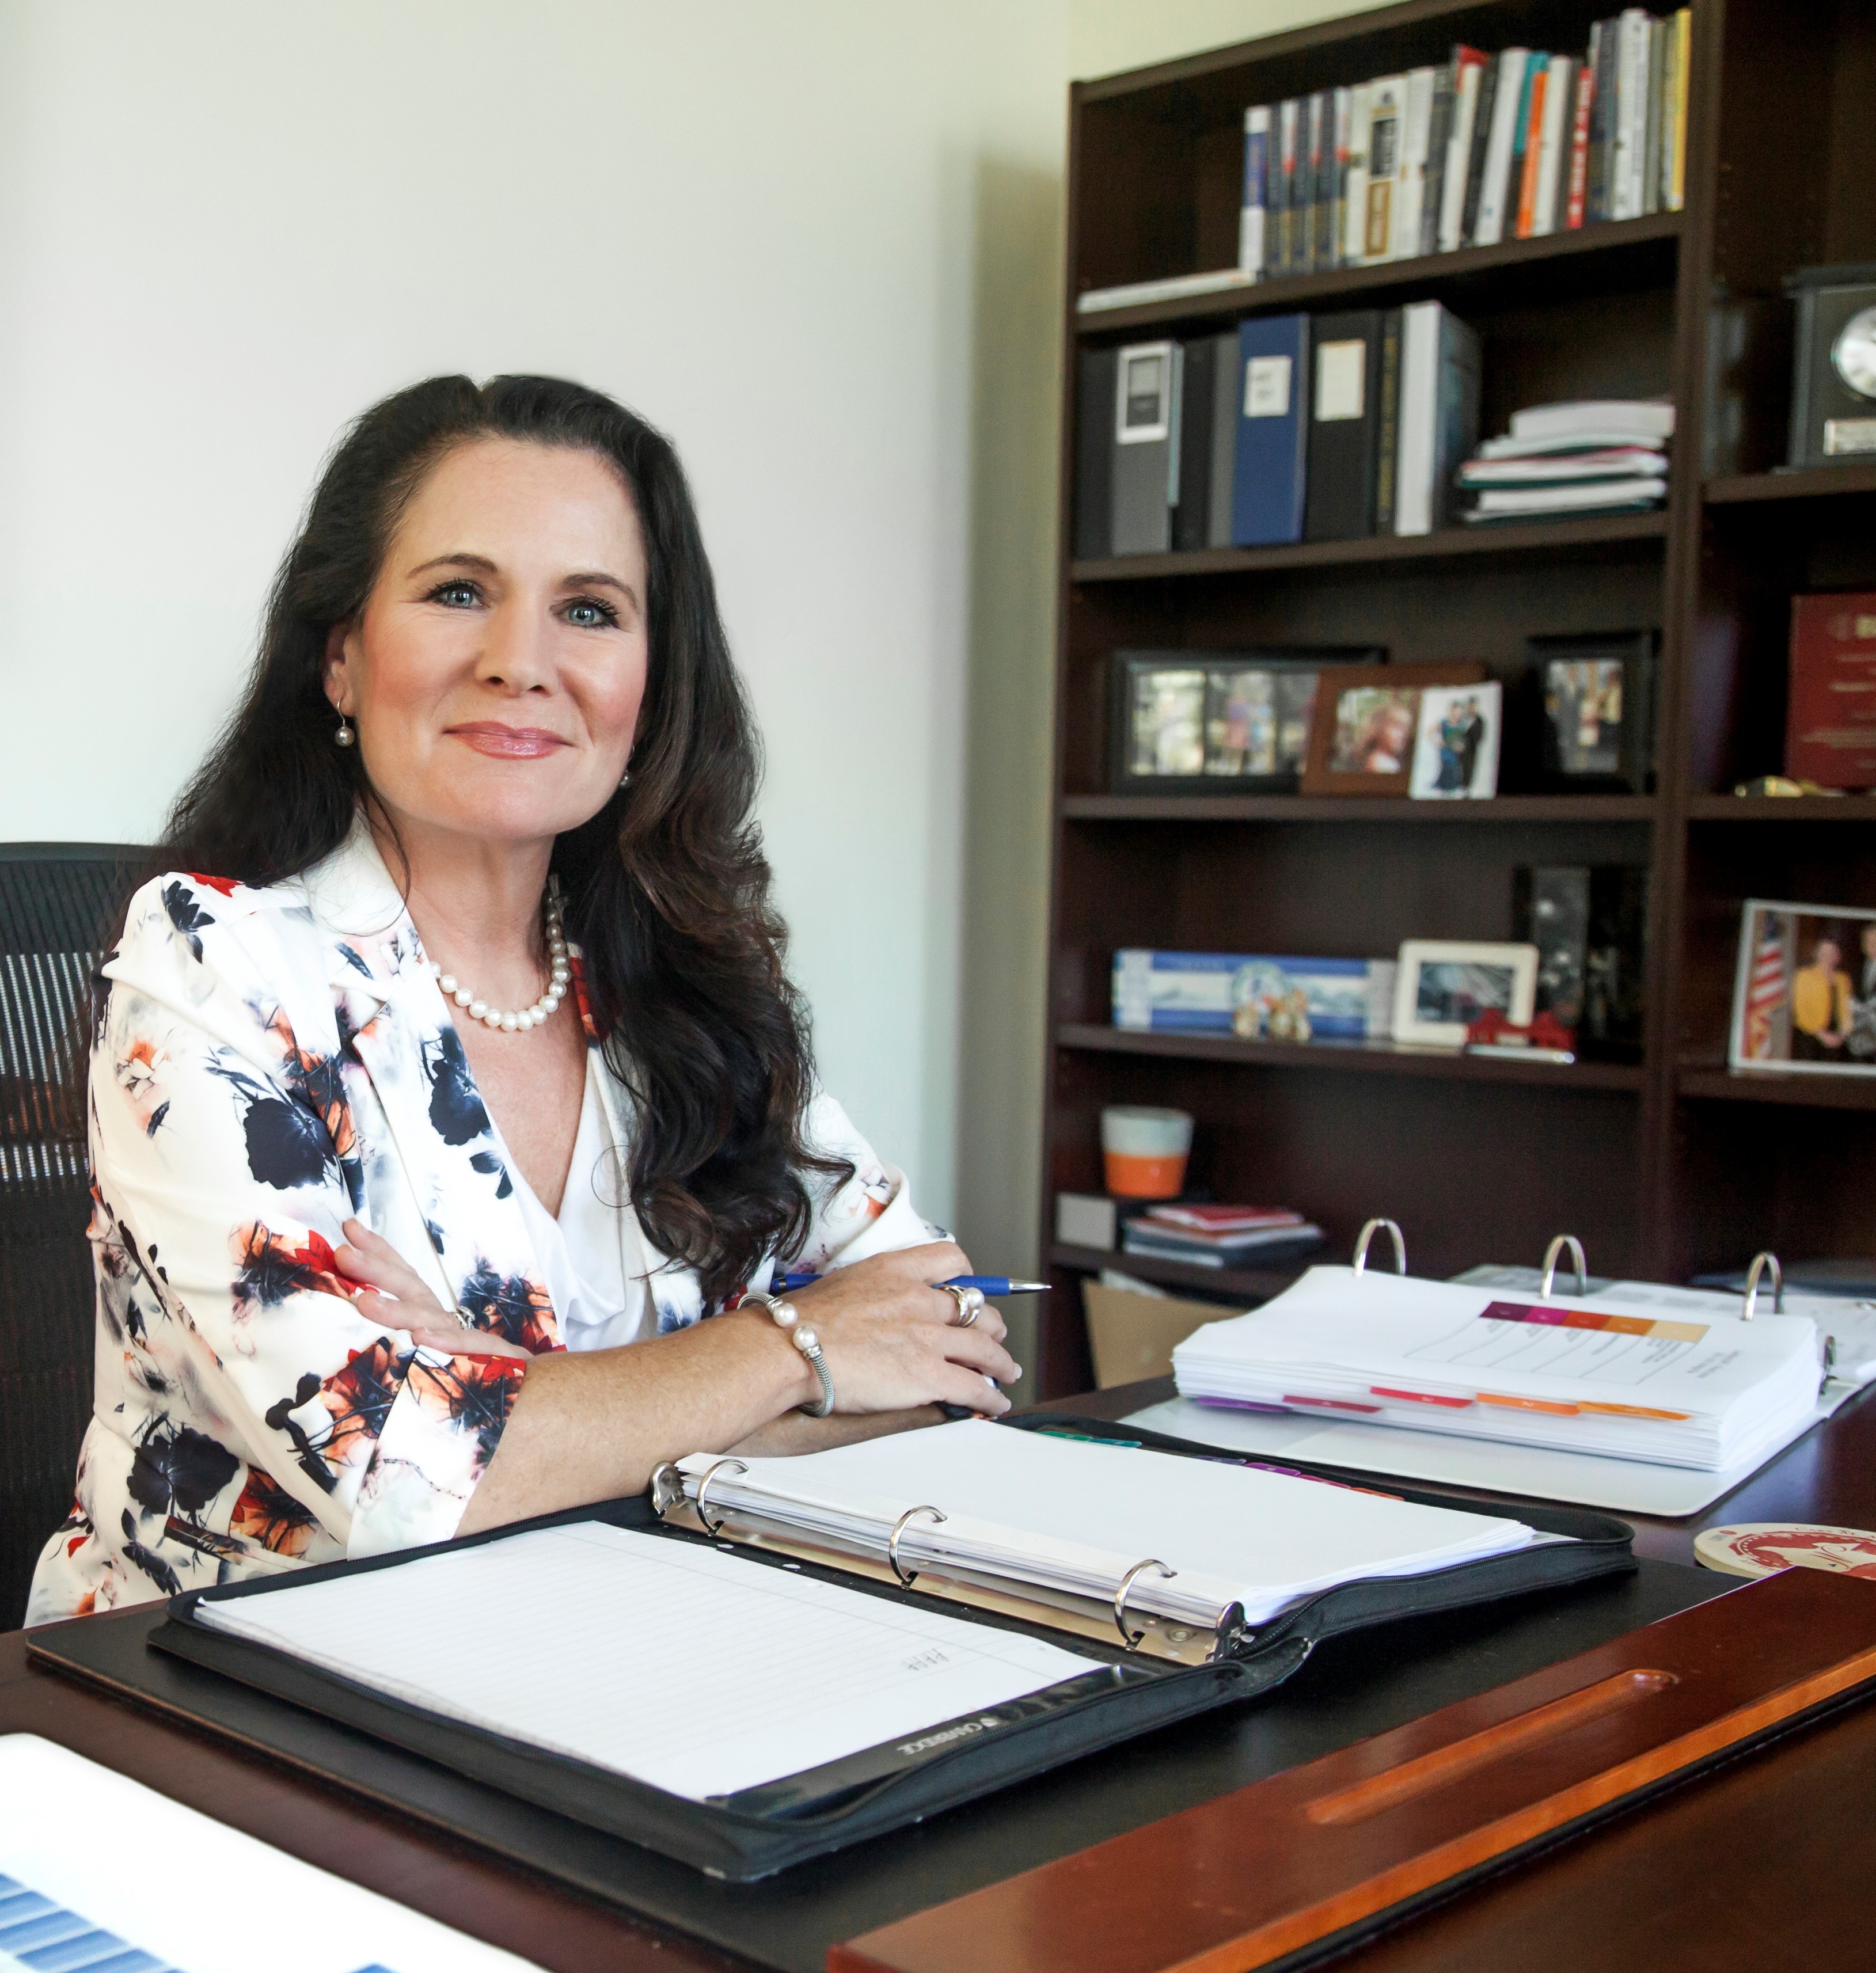 Provost Loboa working at her desk